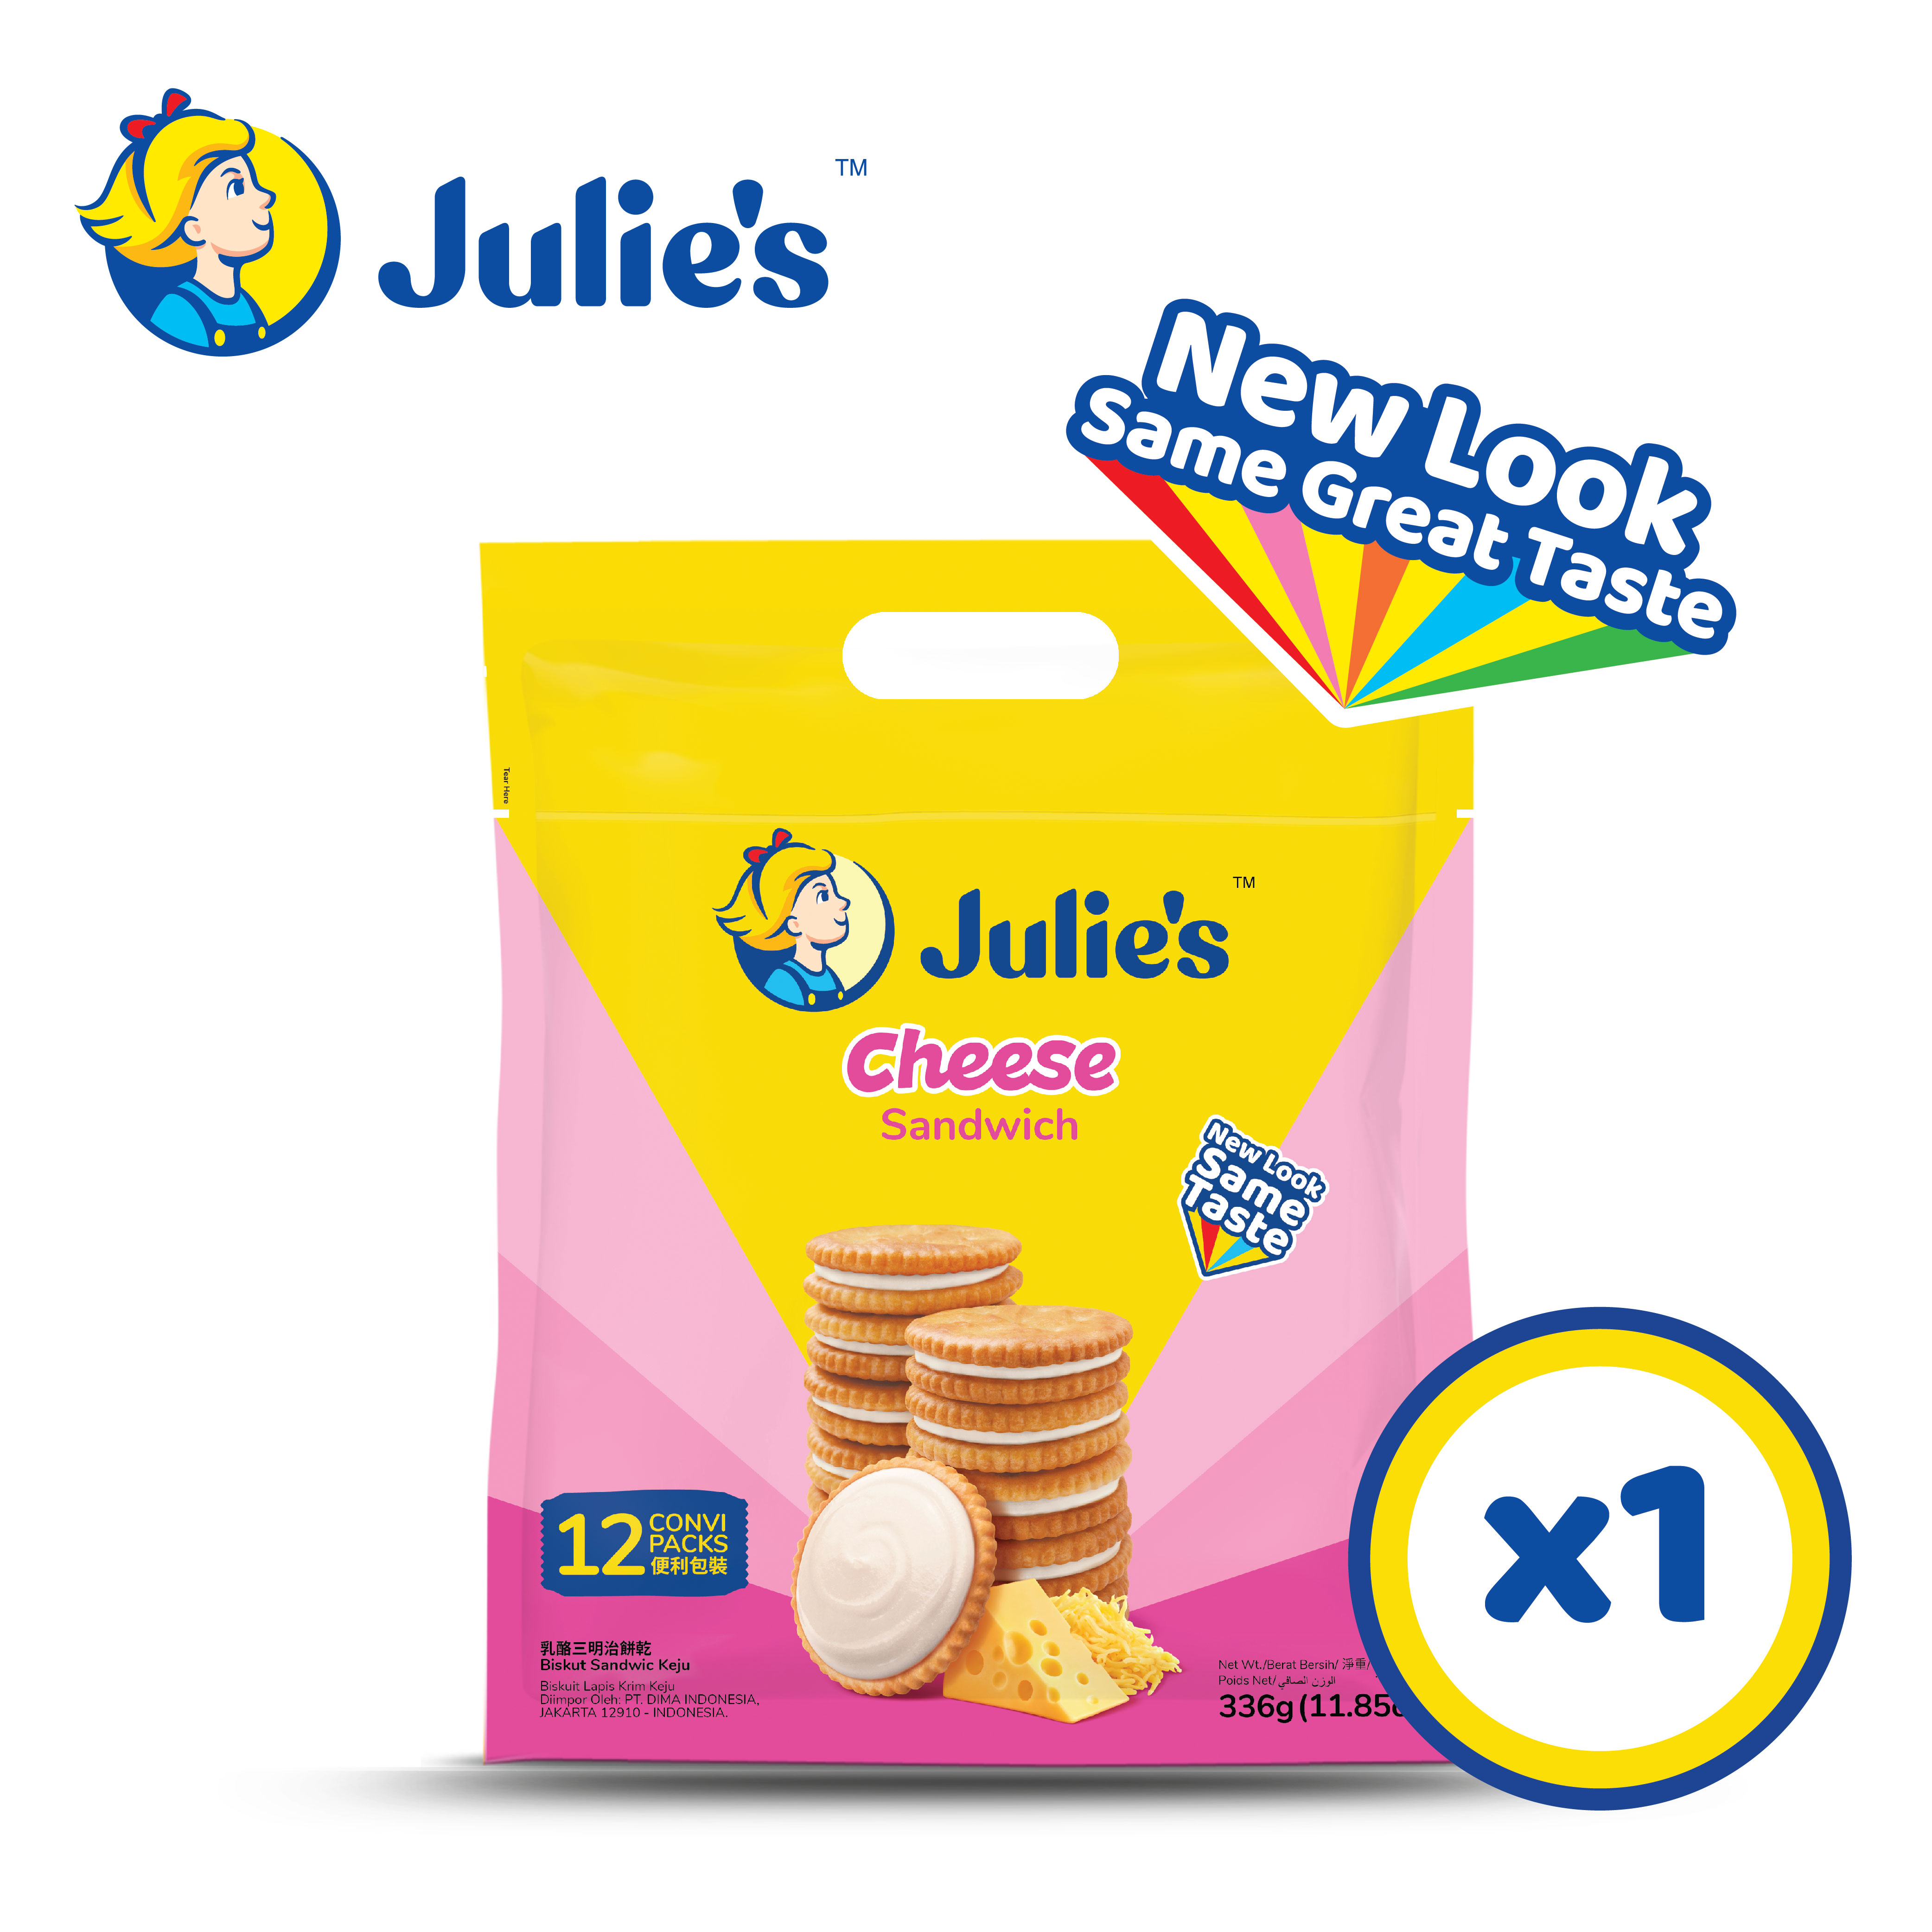 Julie's Cheese Sandwich 336g x 1 pack